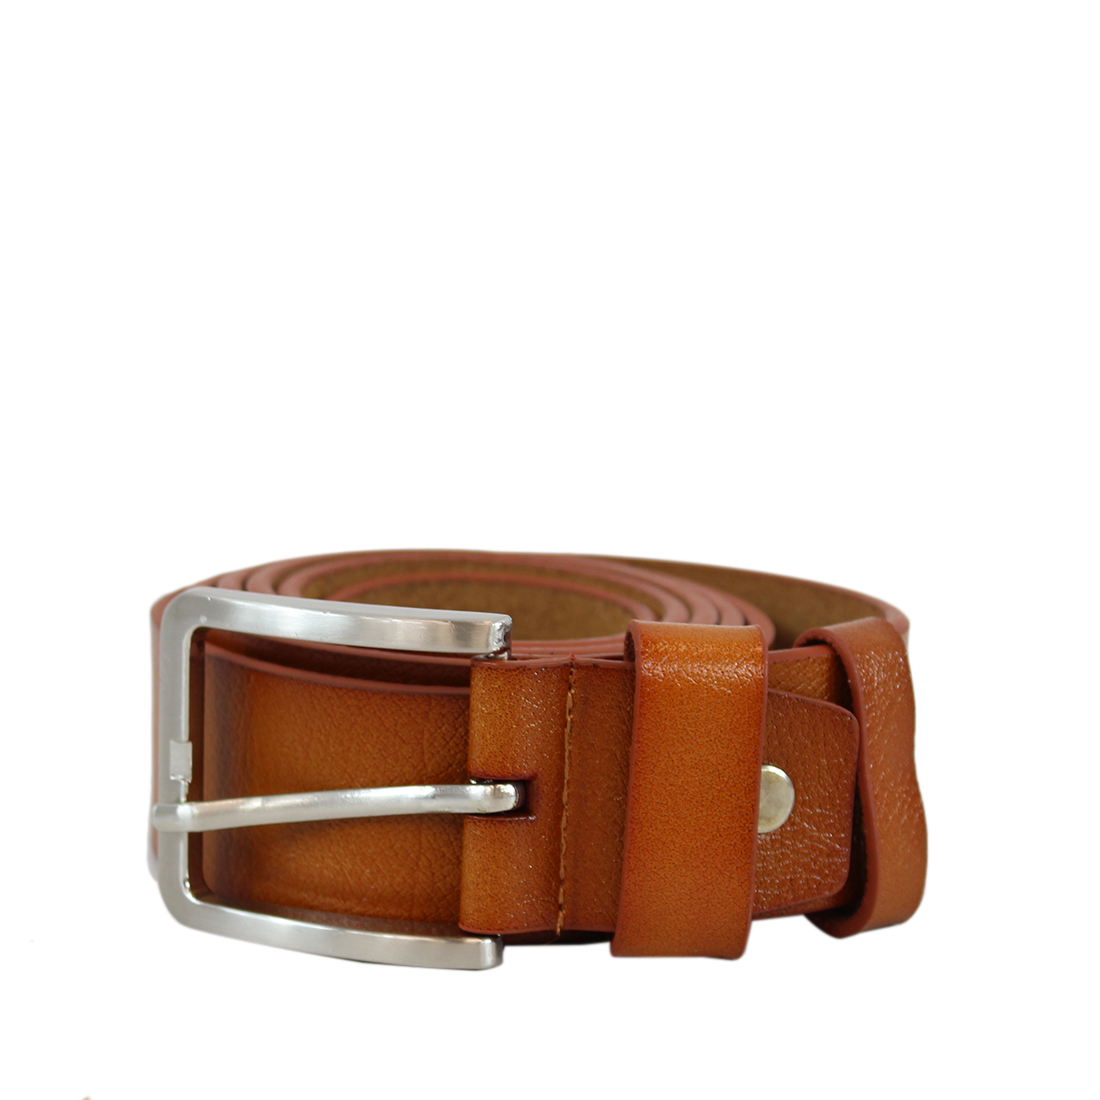 Real leather plain belt